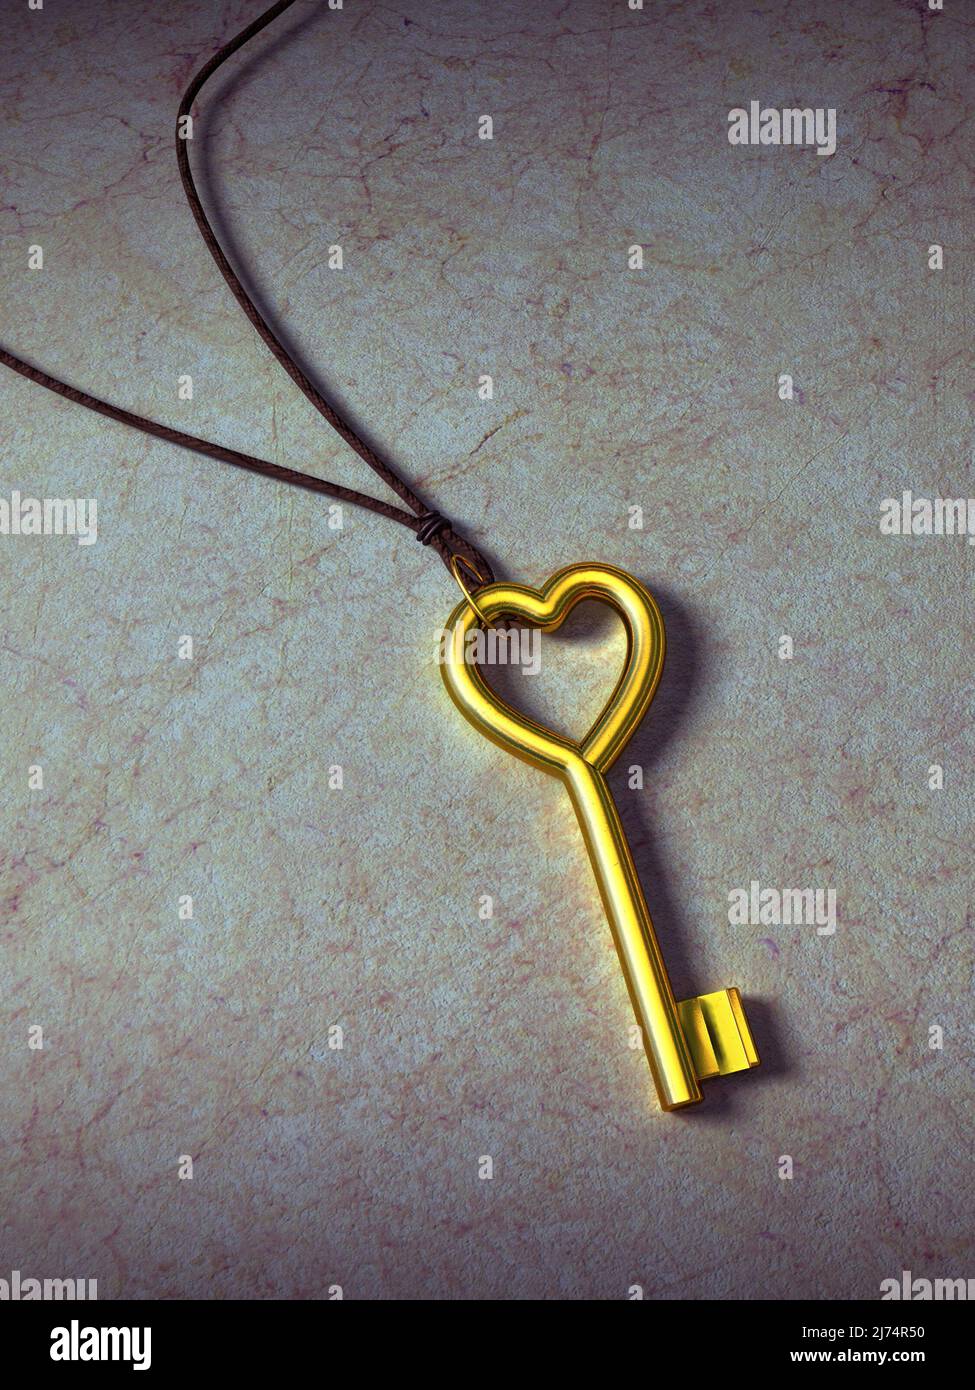 Golden key with its head shaped like an heart. Digital illustration. Stock Photo